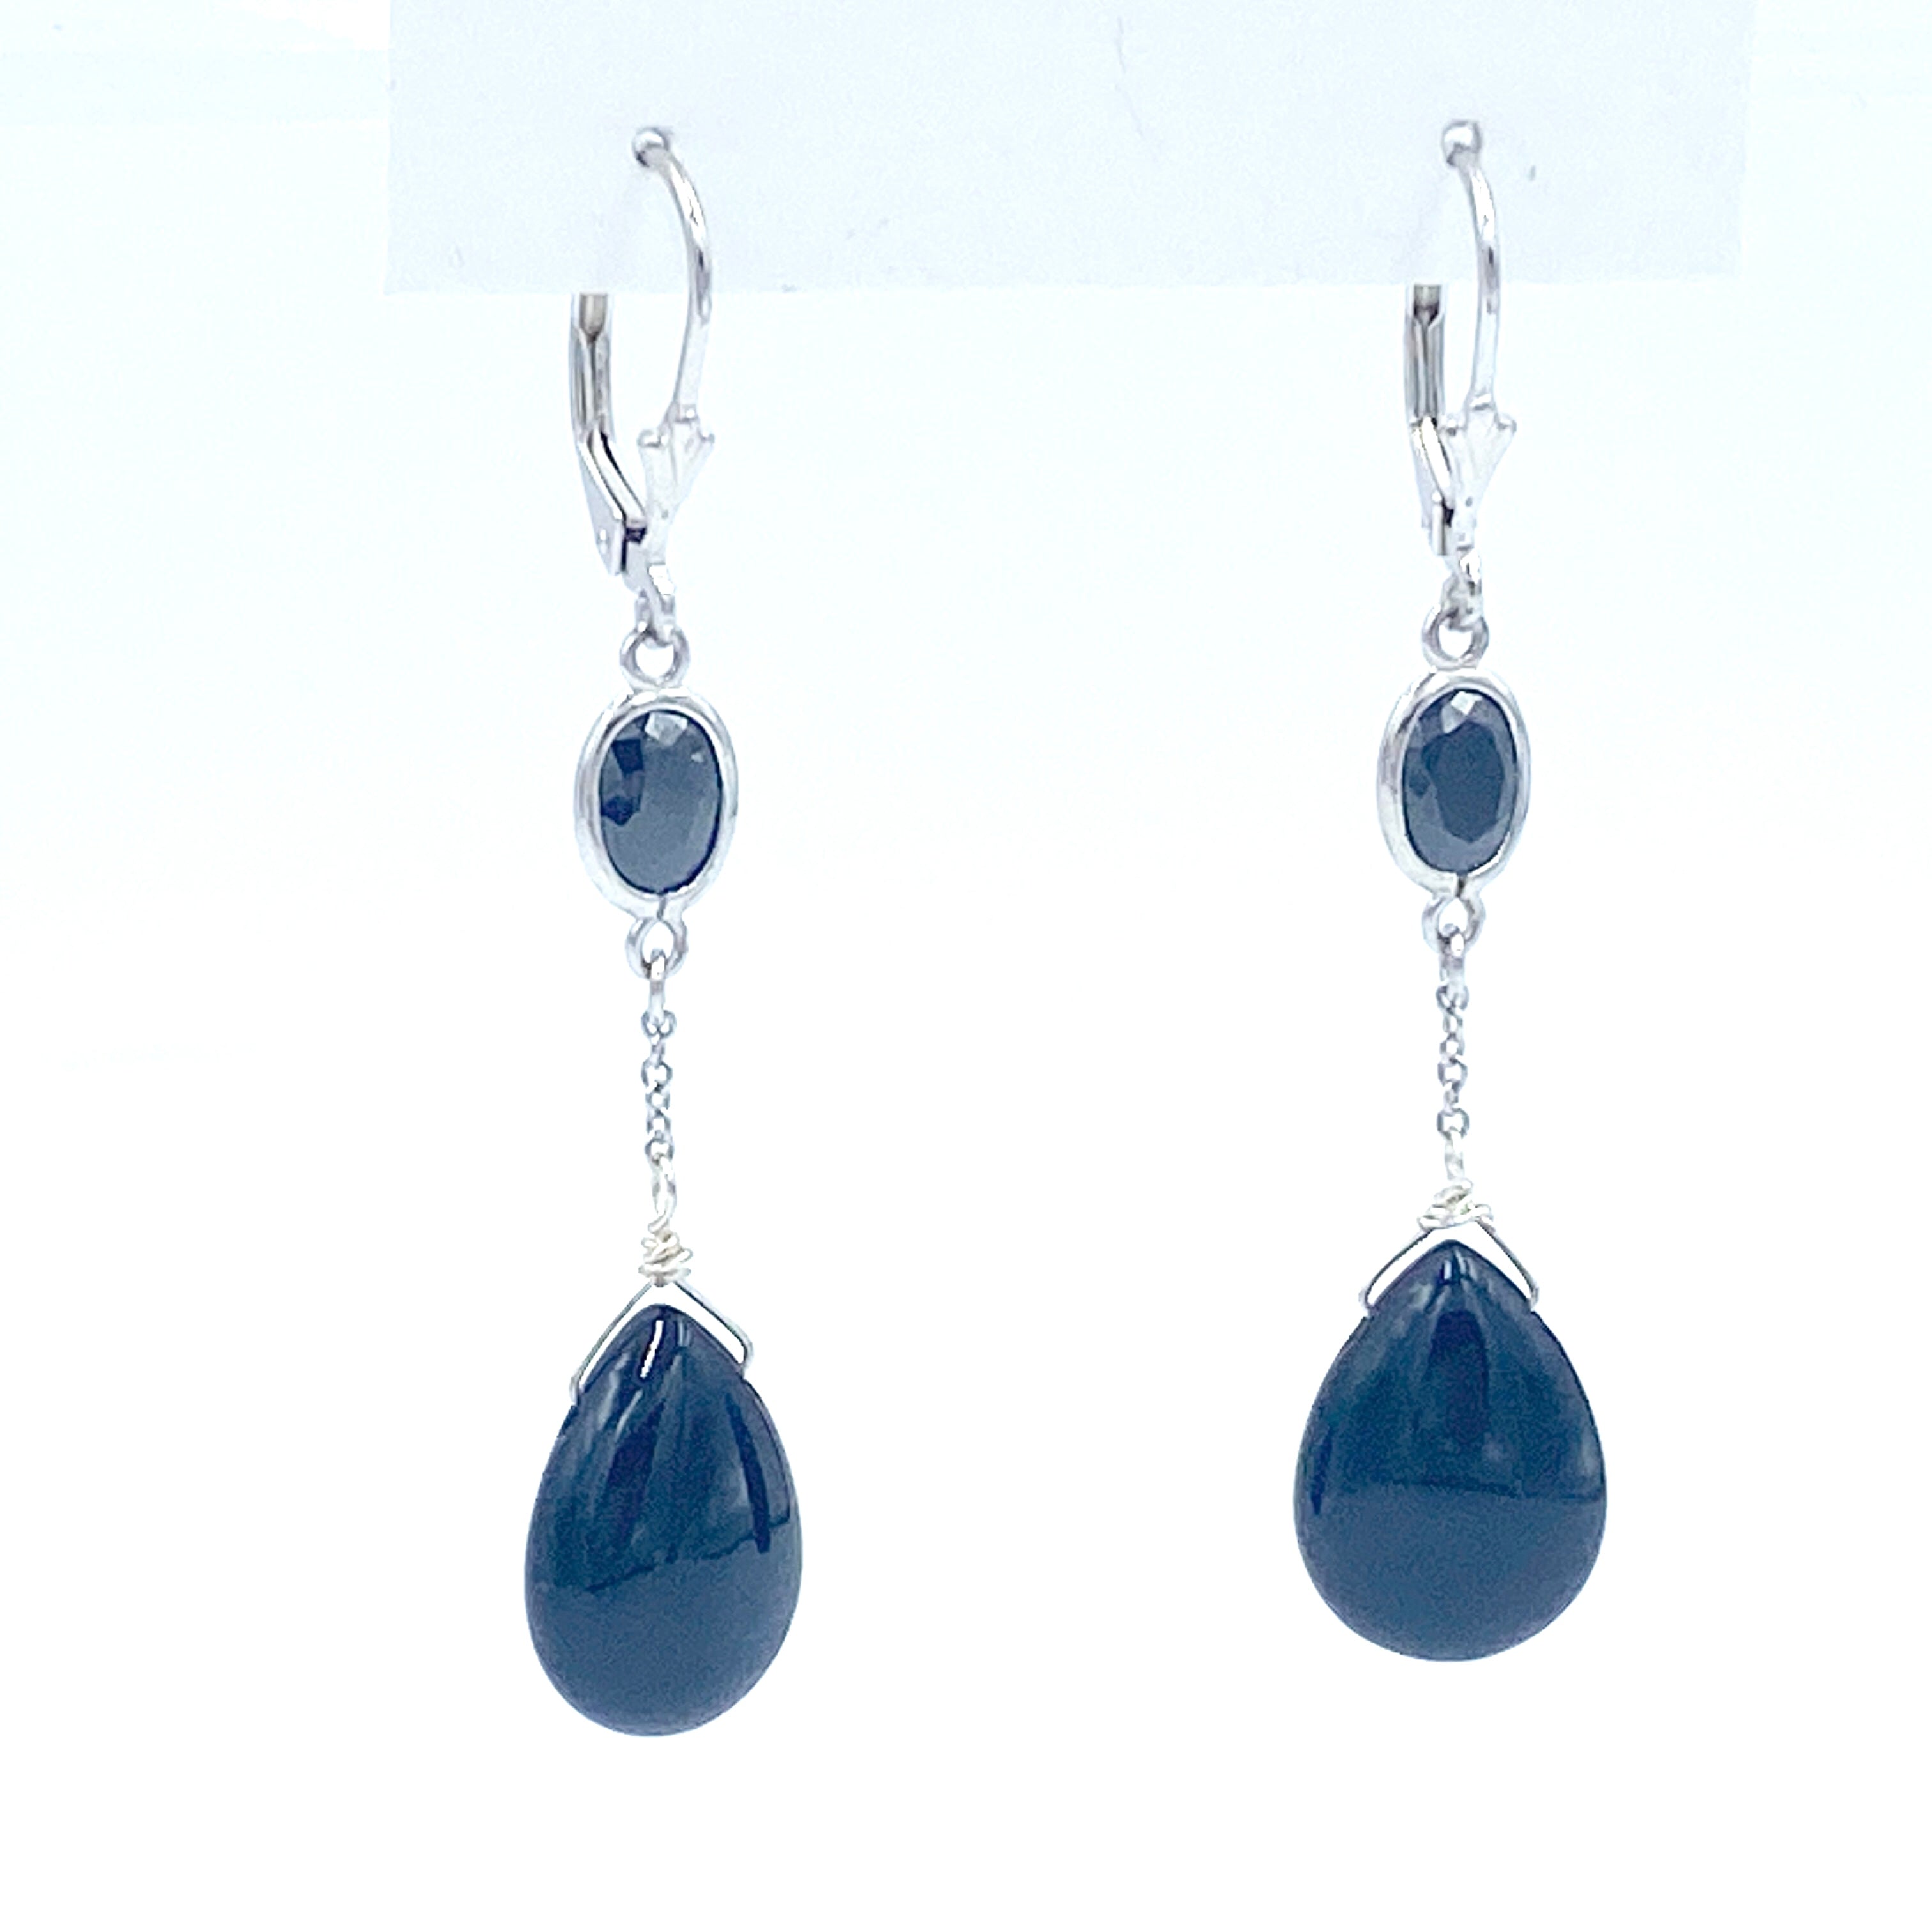 Joanna Bisley Black Onyx with Black Spinel Sterling Silver earrings - 0